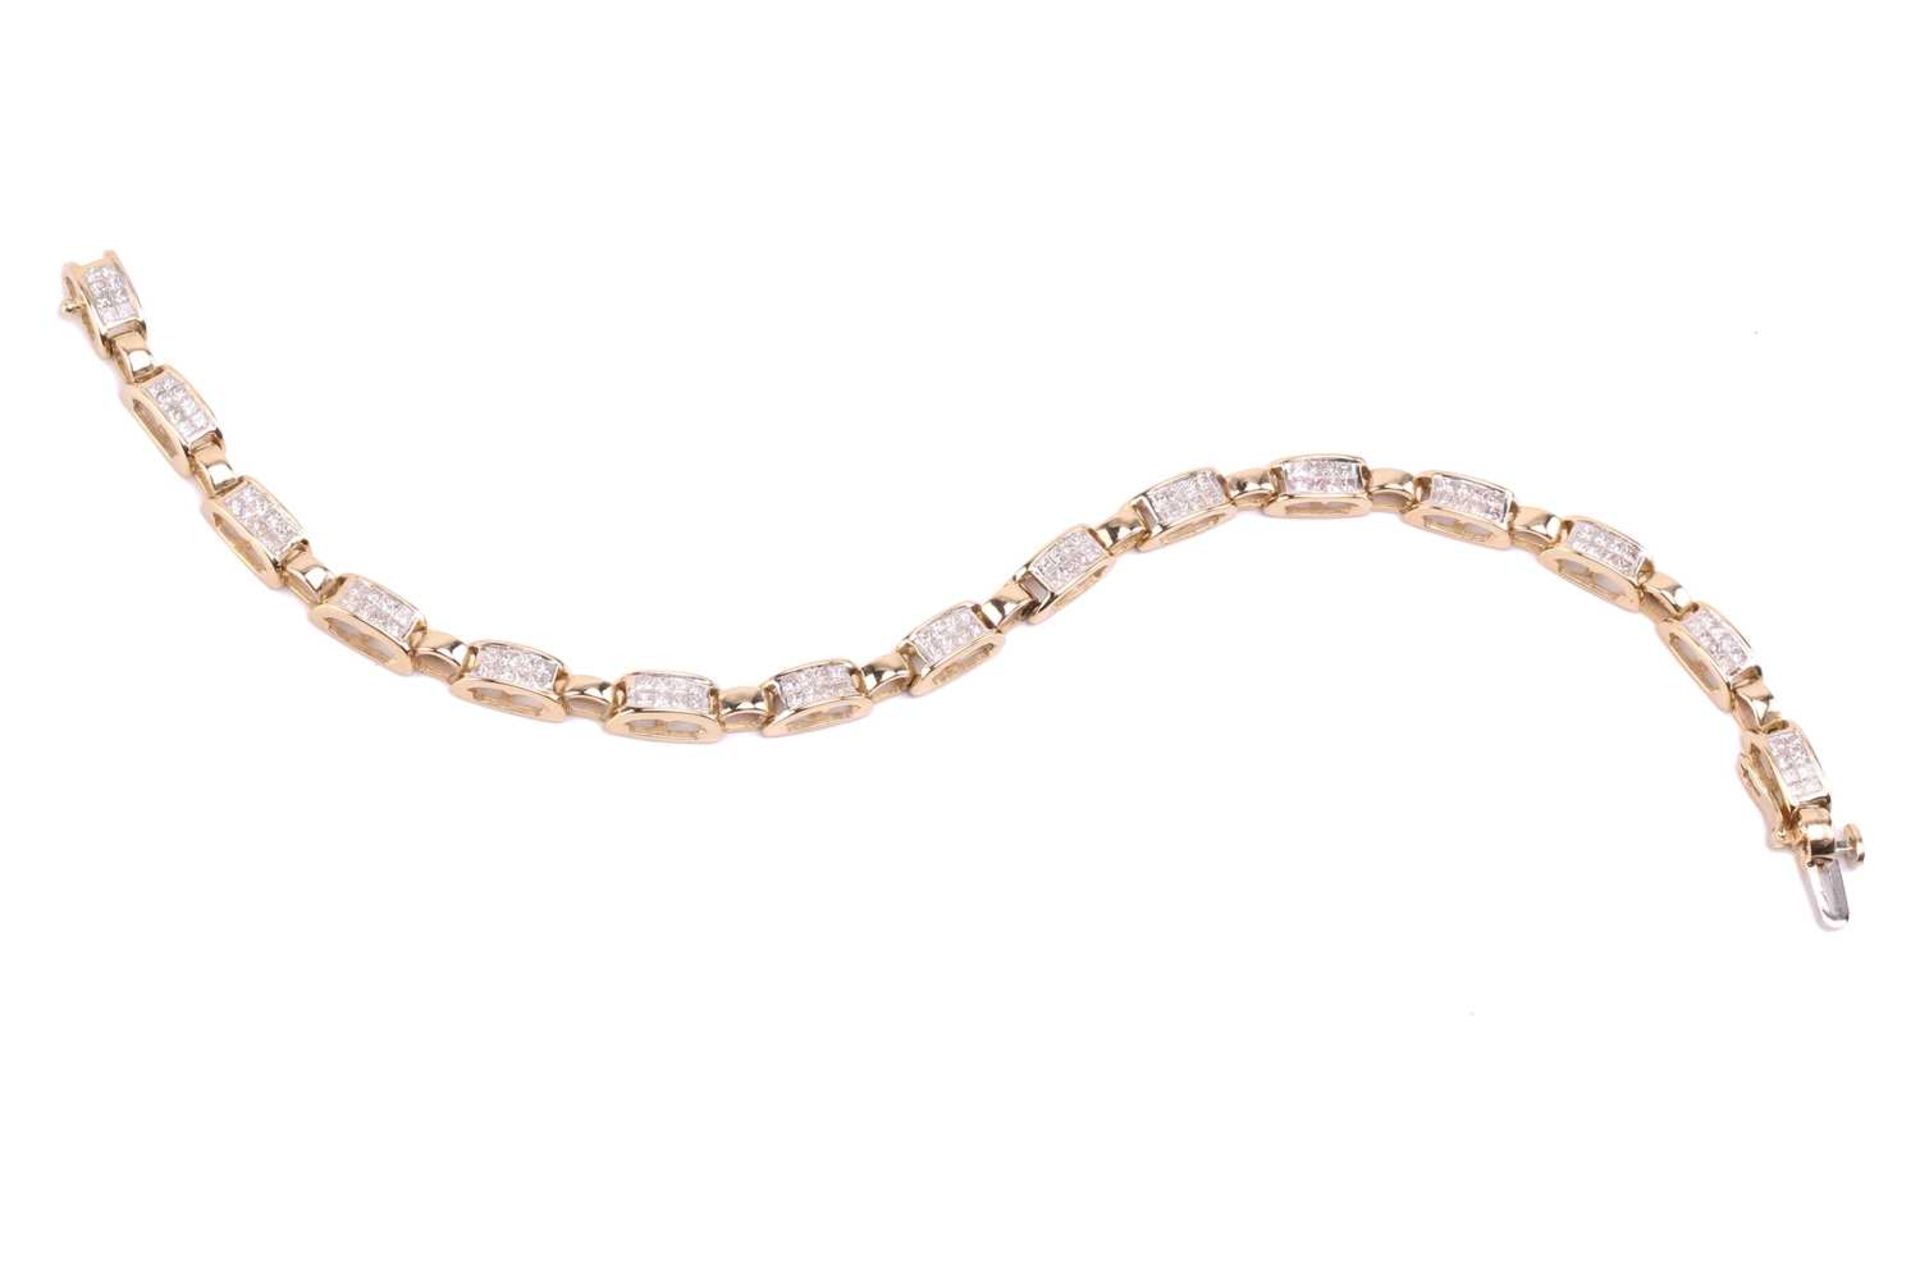 A princess cut diamond line bracelet, with 15 oval cut-out sections channel set with princess cut